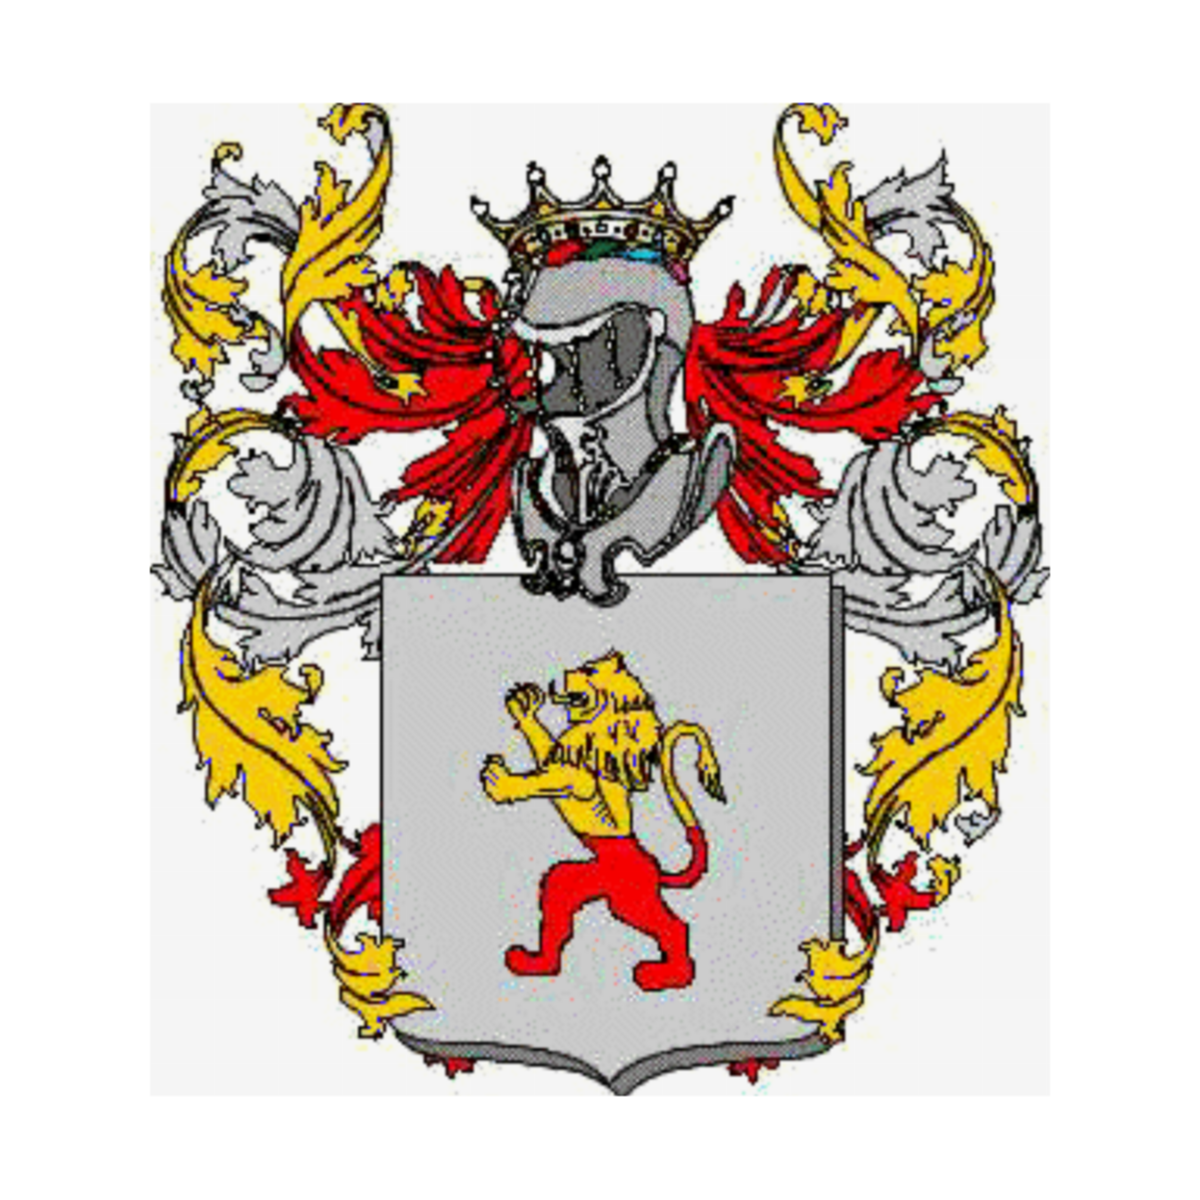 Wappen der Familie Cavanesi